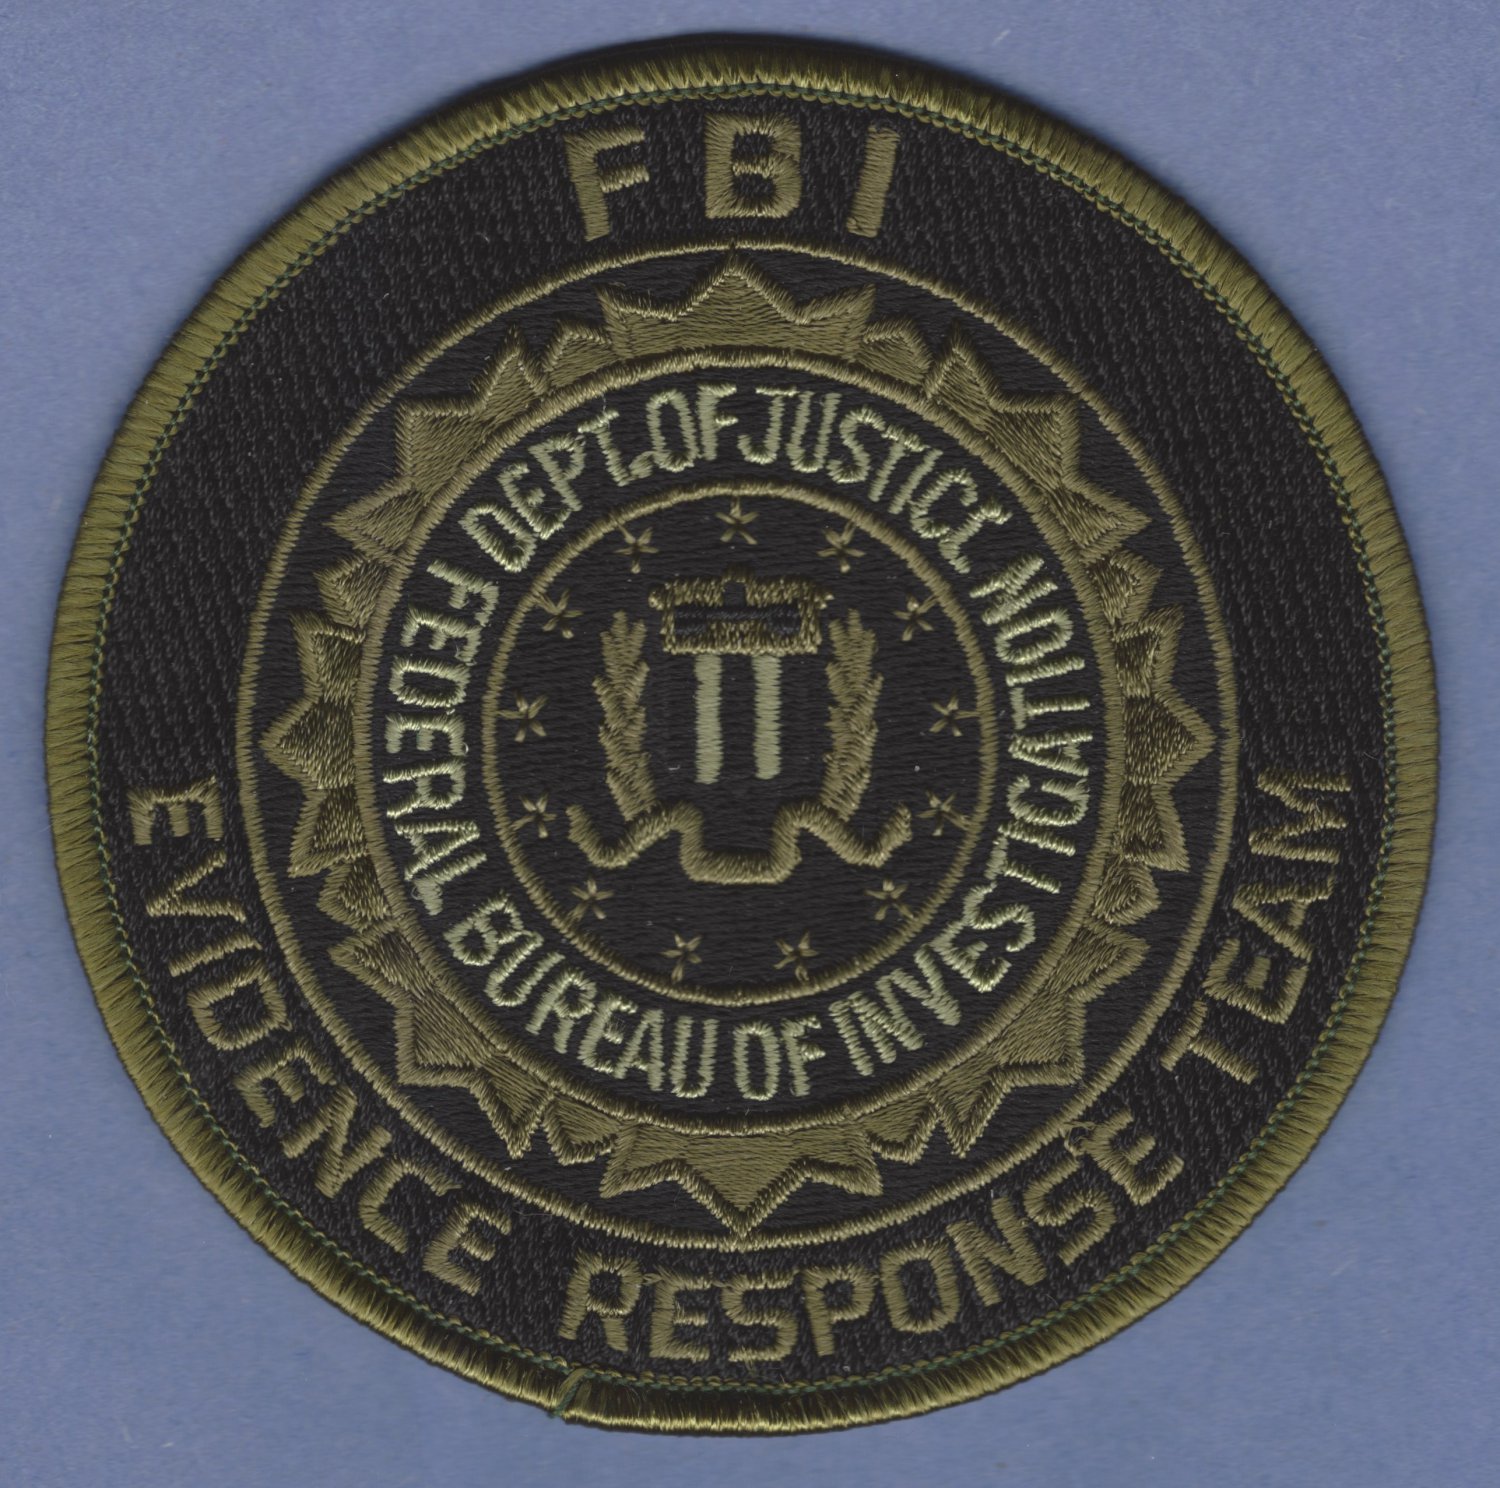 FBI Federal Bureau of Investigation Evidence Response Team Patch.